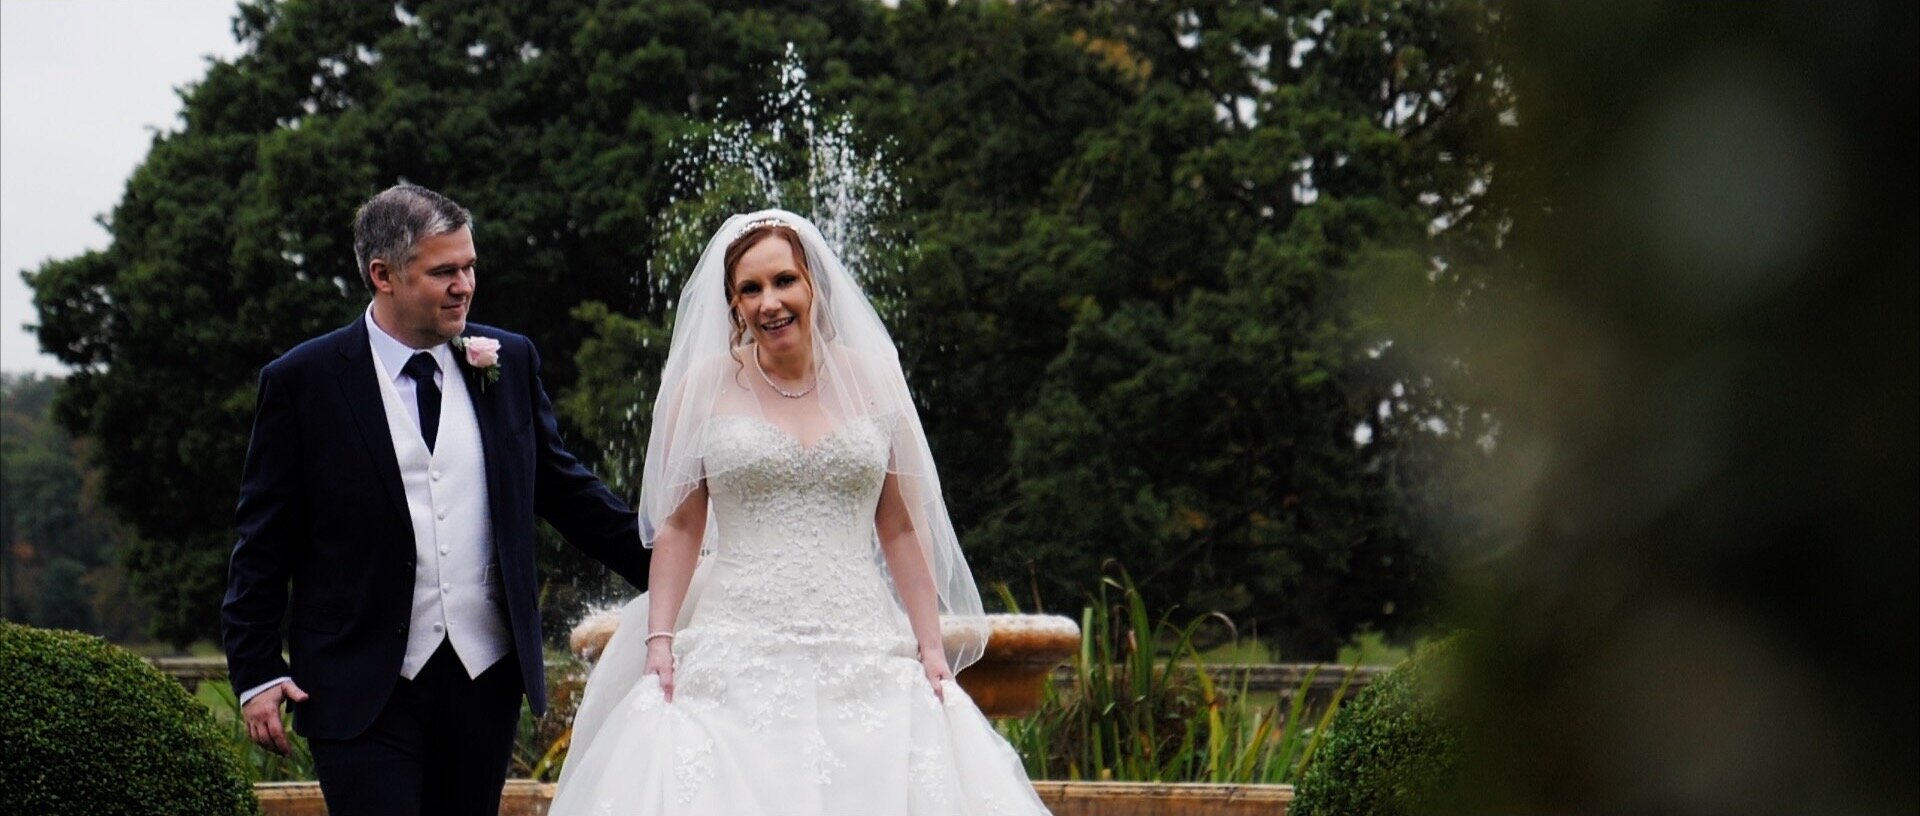 Susie and Ben wedding video highlights Quendon Hall Essex.jpg